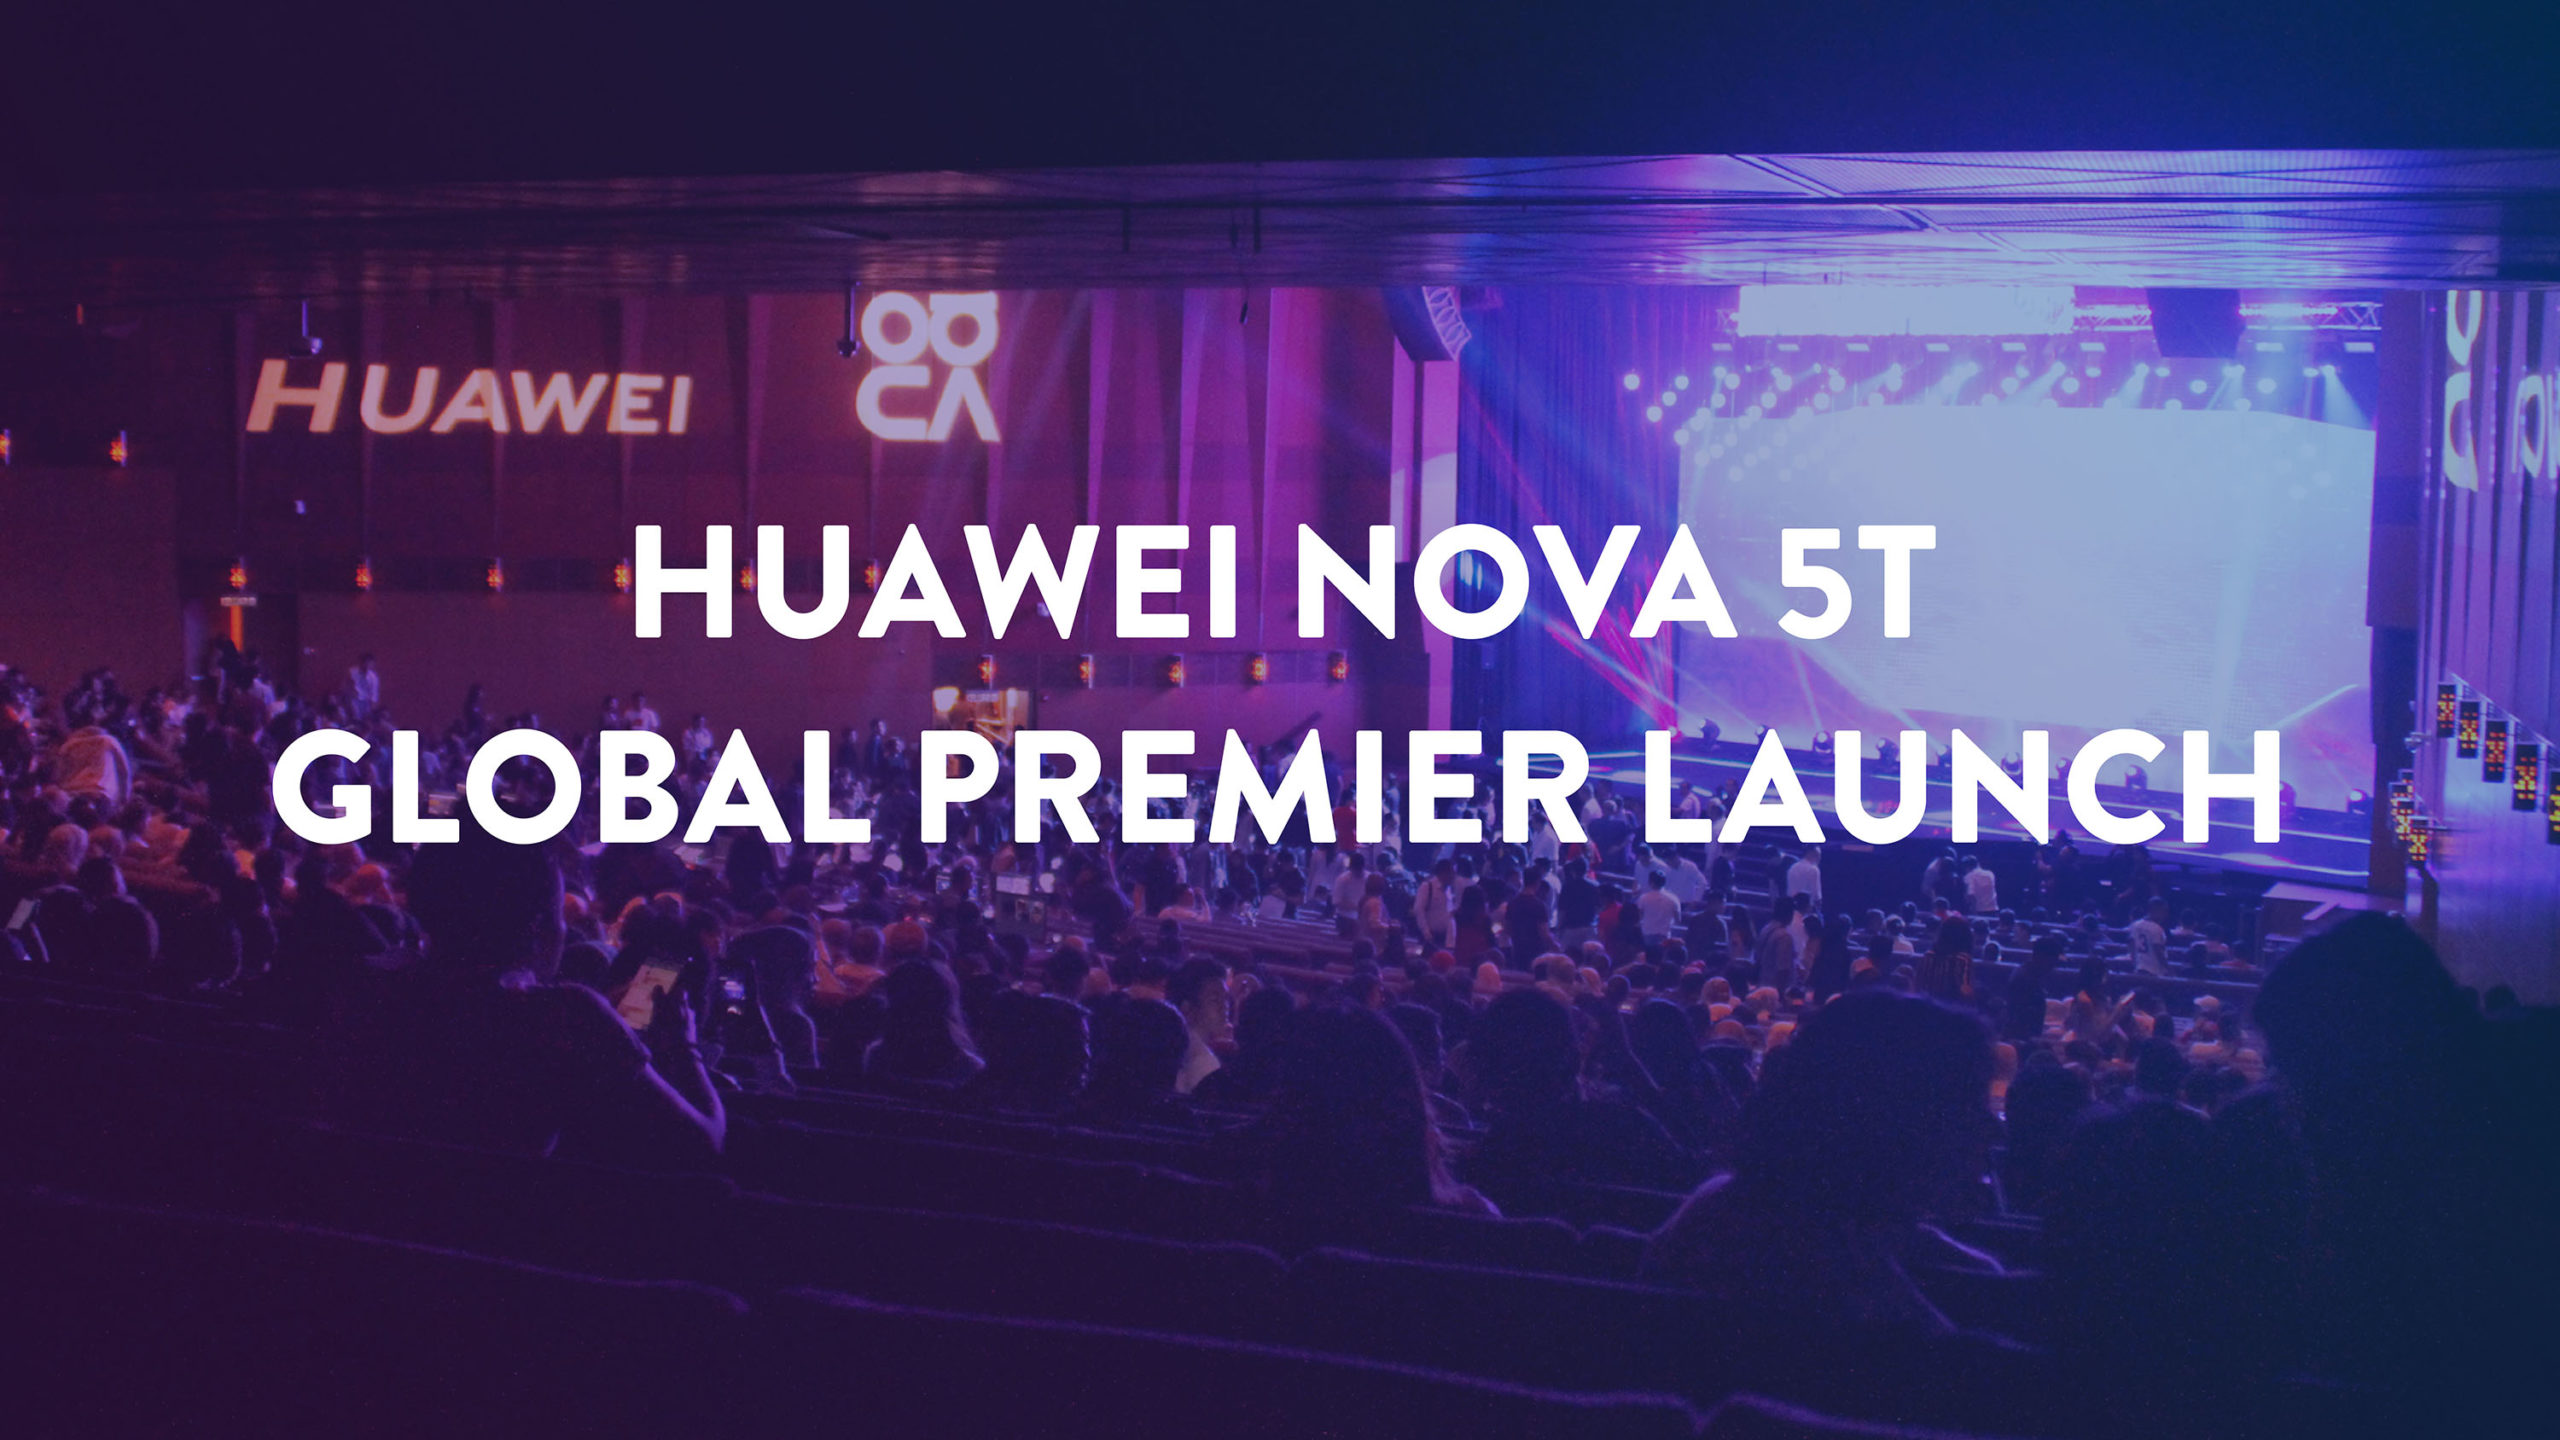 Huawei Nova 5t Global Premier Launch